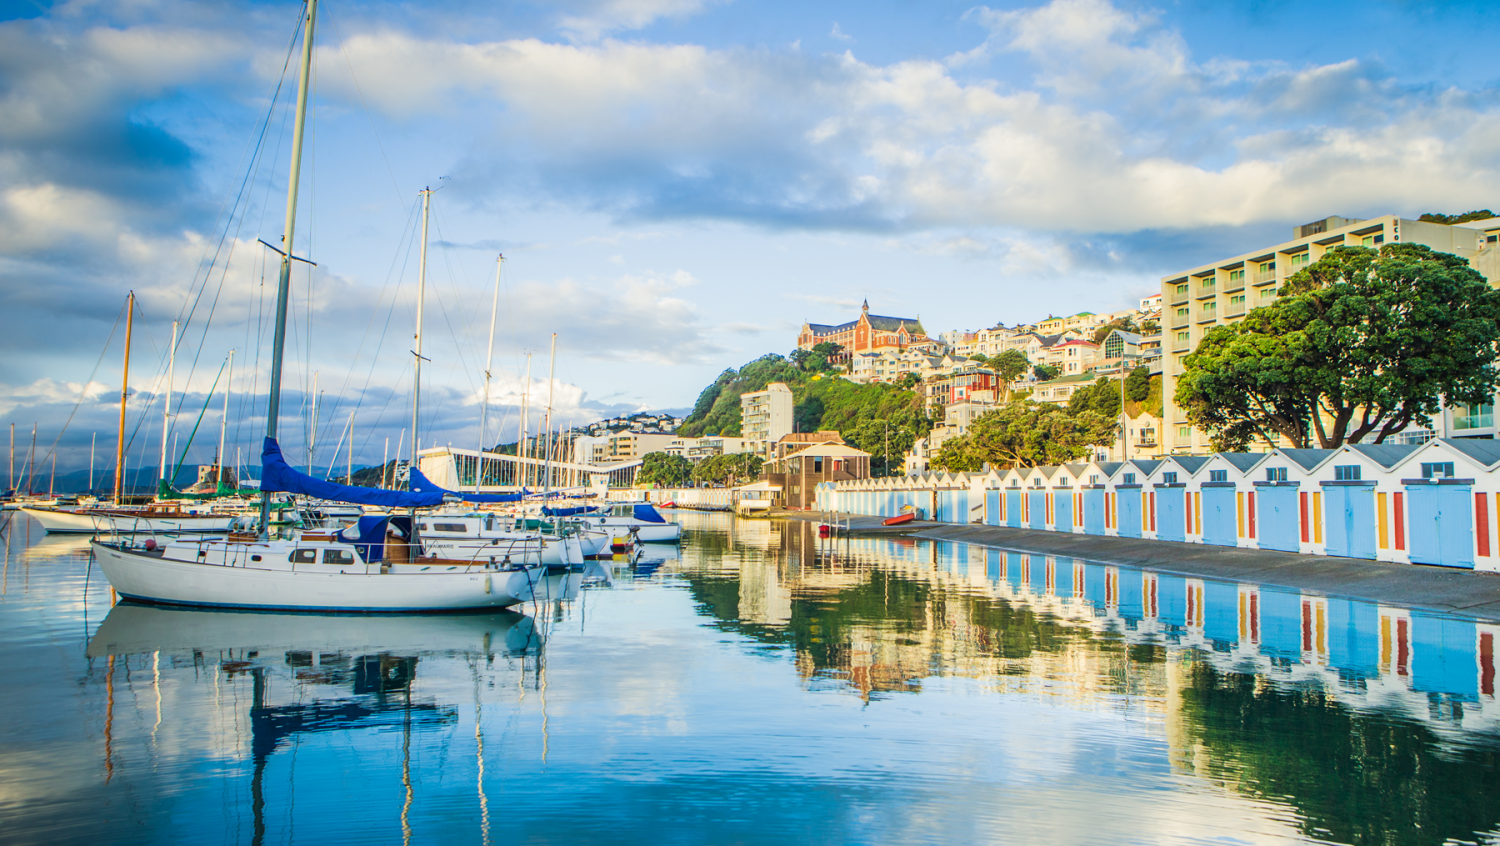 Image for Wellington - The Coolest Little Capital!